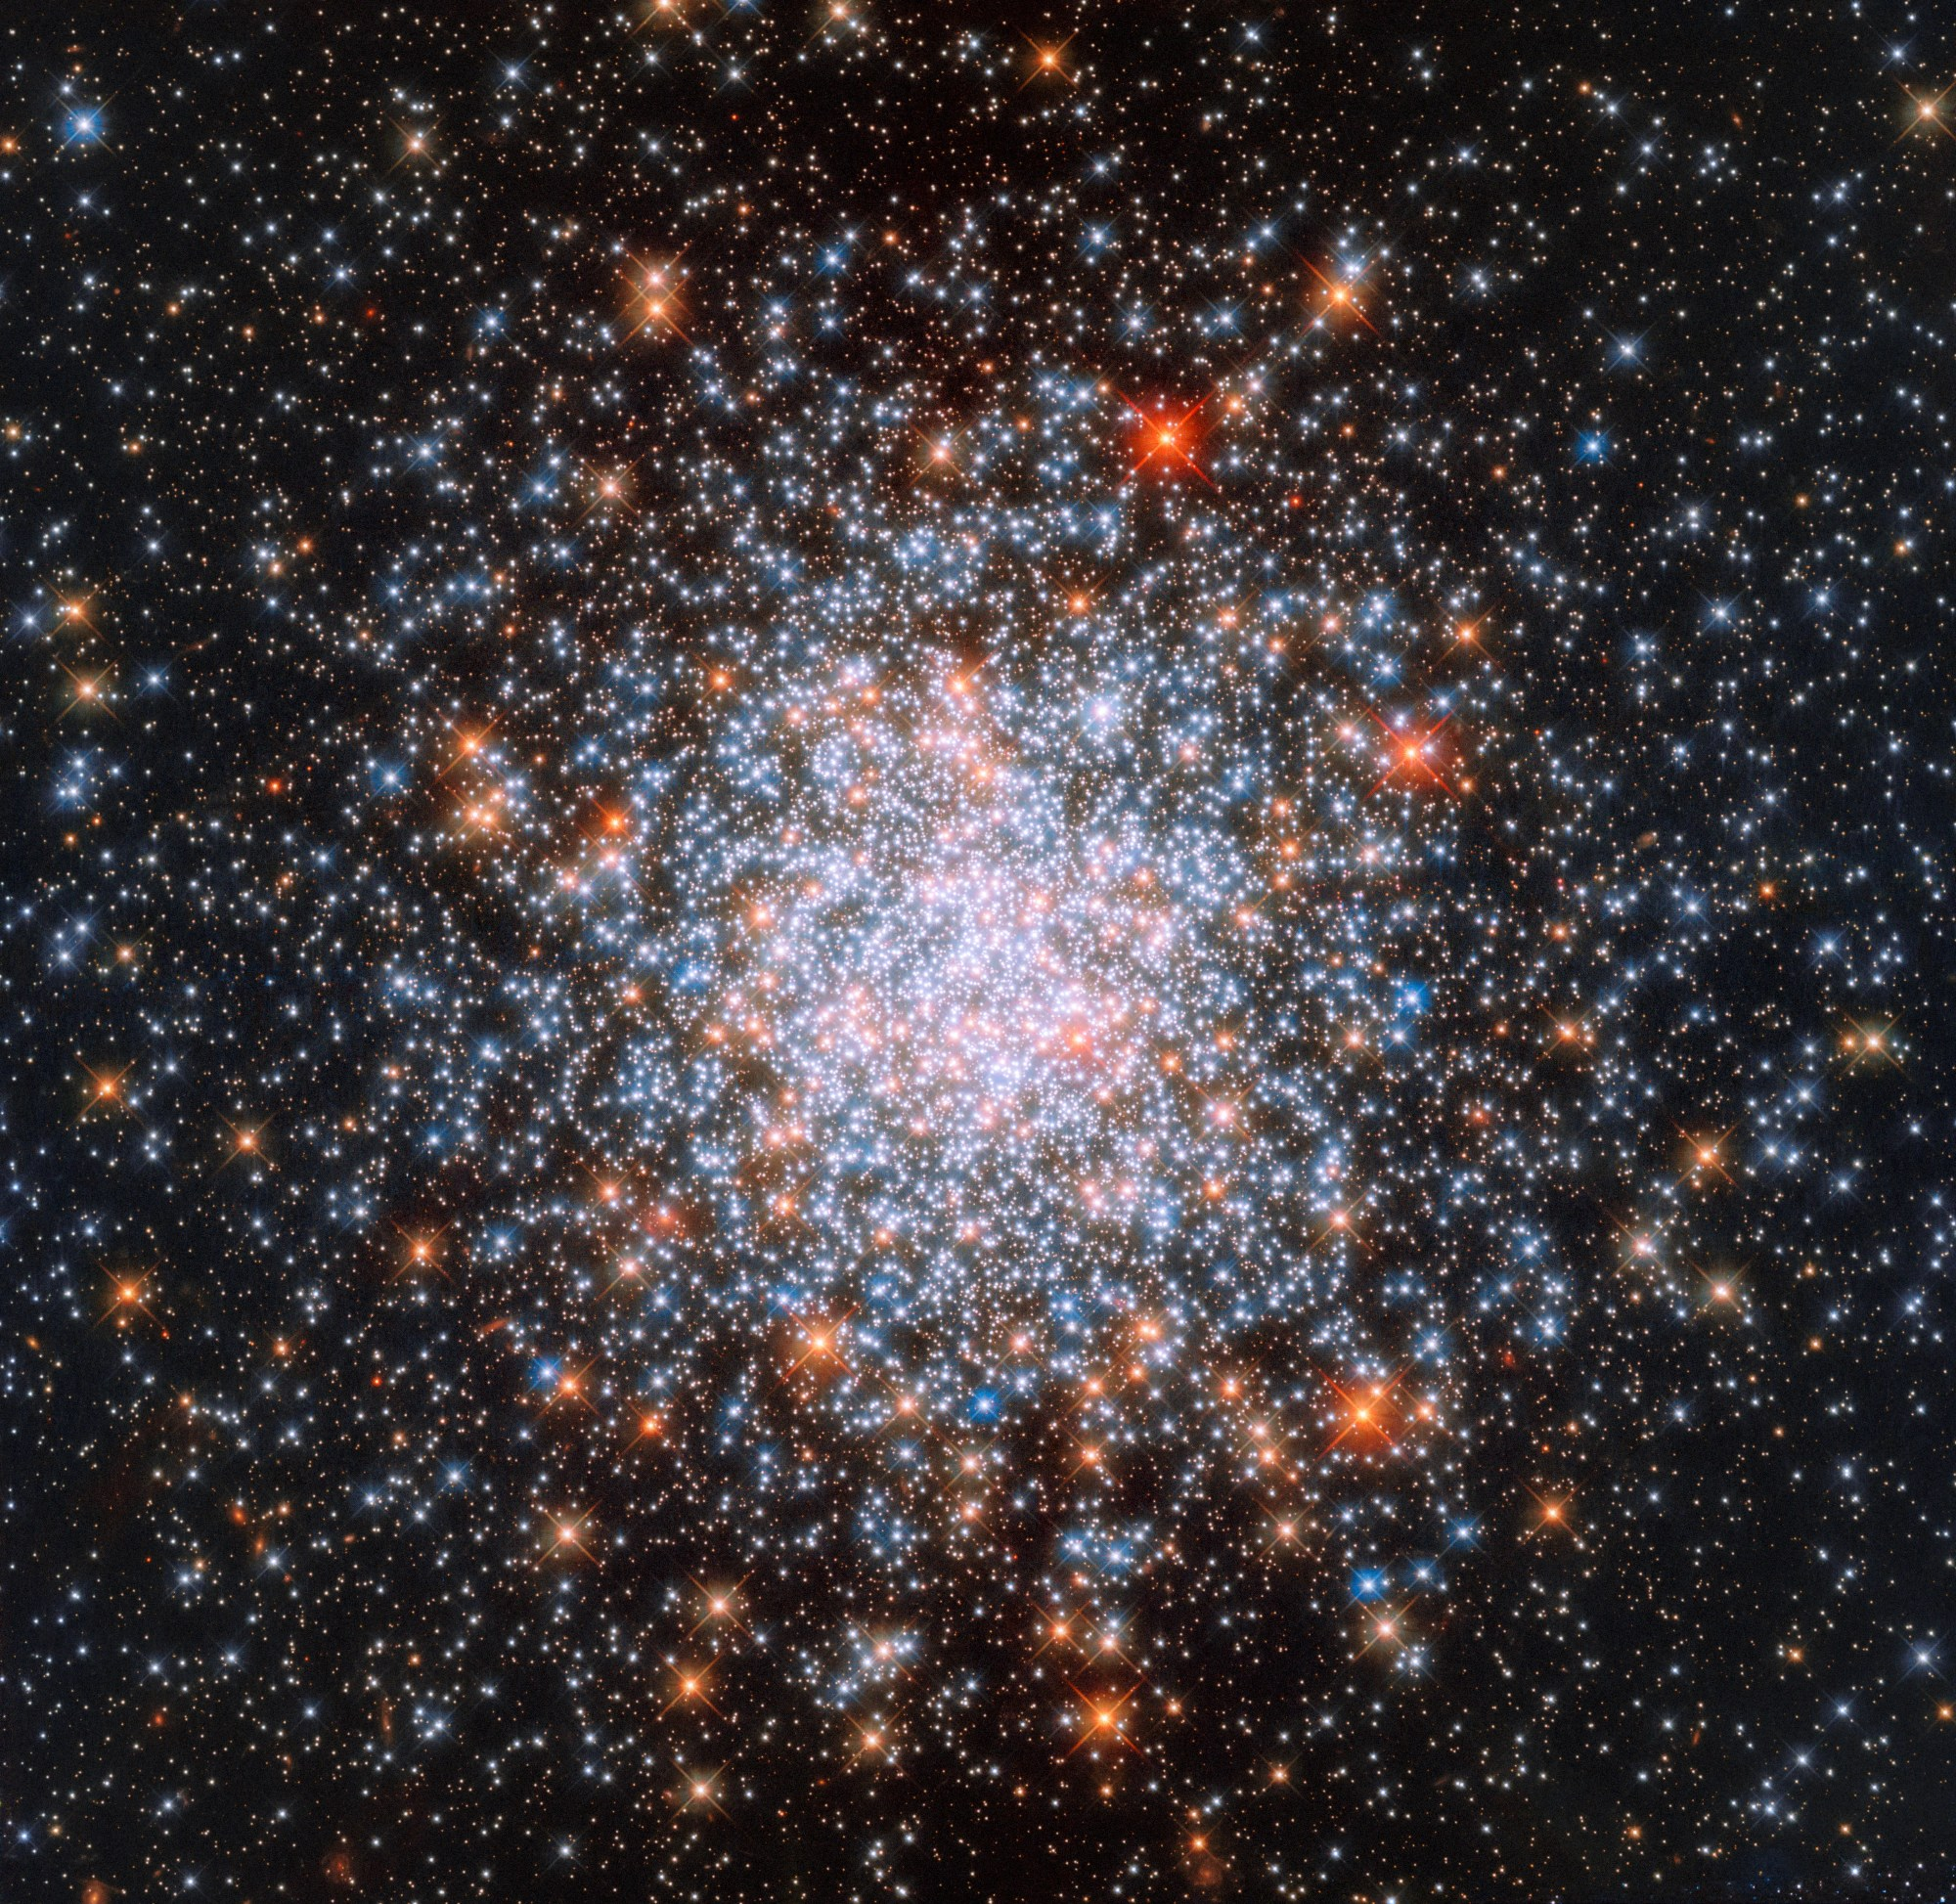 multi colored stars in space